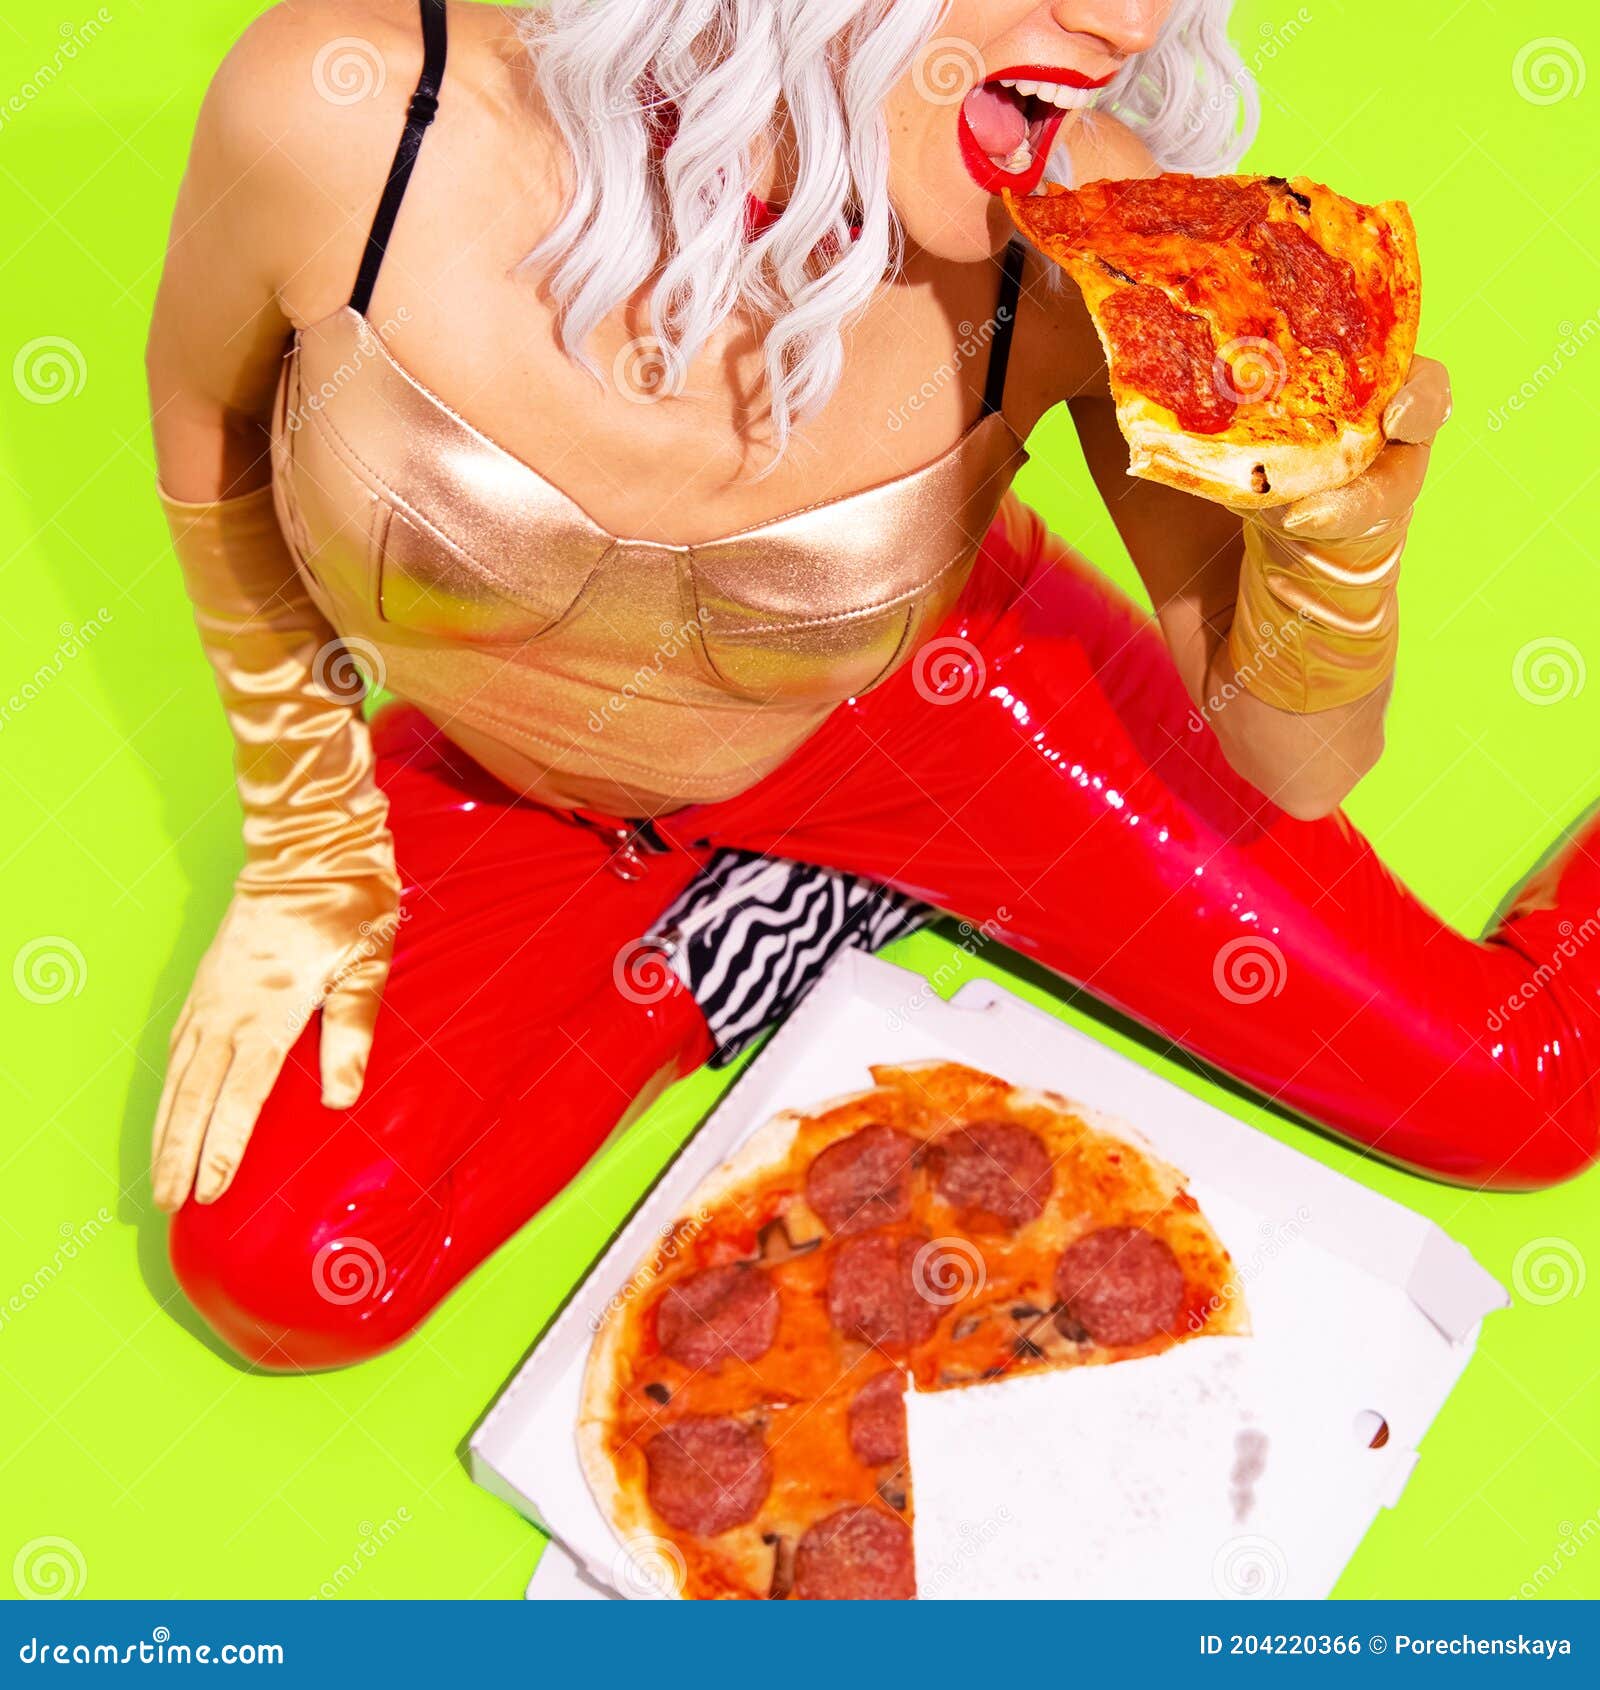 Porn Girl Food - Fashion Creative Design. Minimal Art. Pizza Addict Hungry Blonde Girl. Food  Concept Stock Photo - Image of creative, face: 204220366